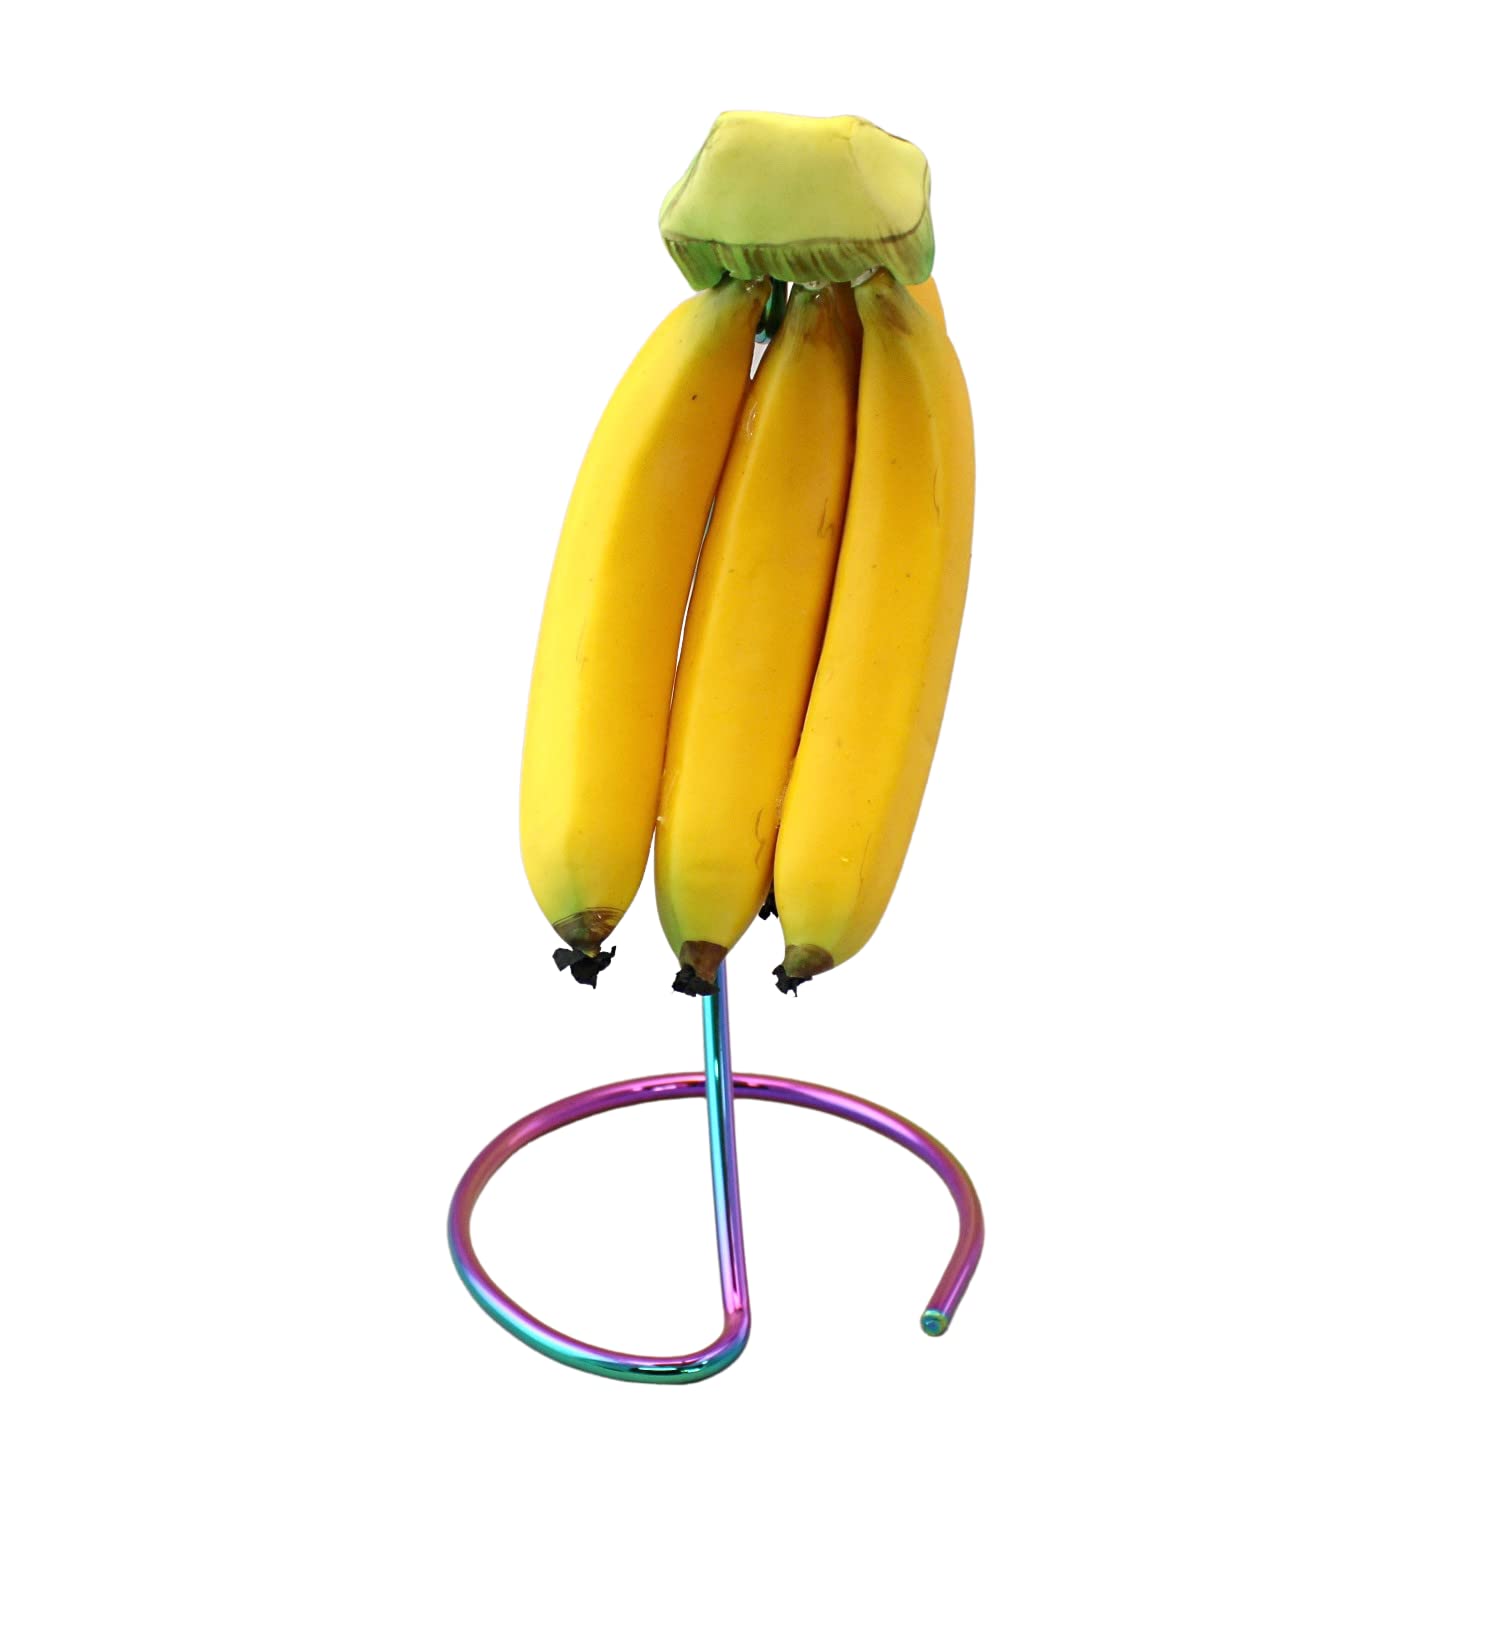 Rainbow Banana Tree Holder Stand Rack Ripen Fruit Evenly Prevents Bruising & Spoiling Multi-Colored Steel